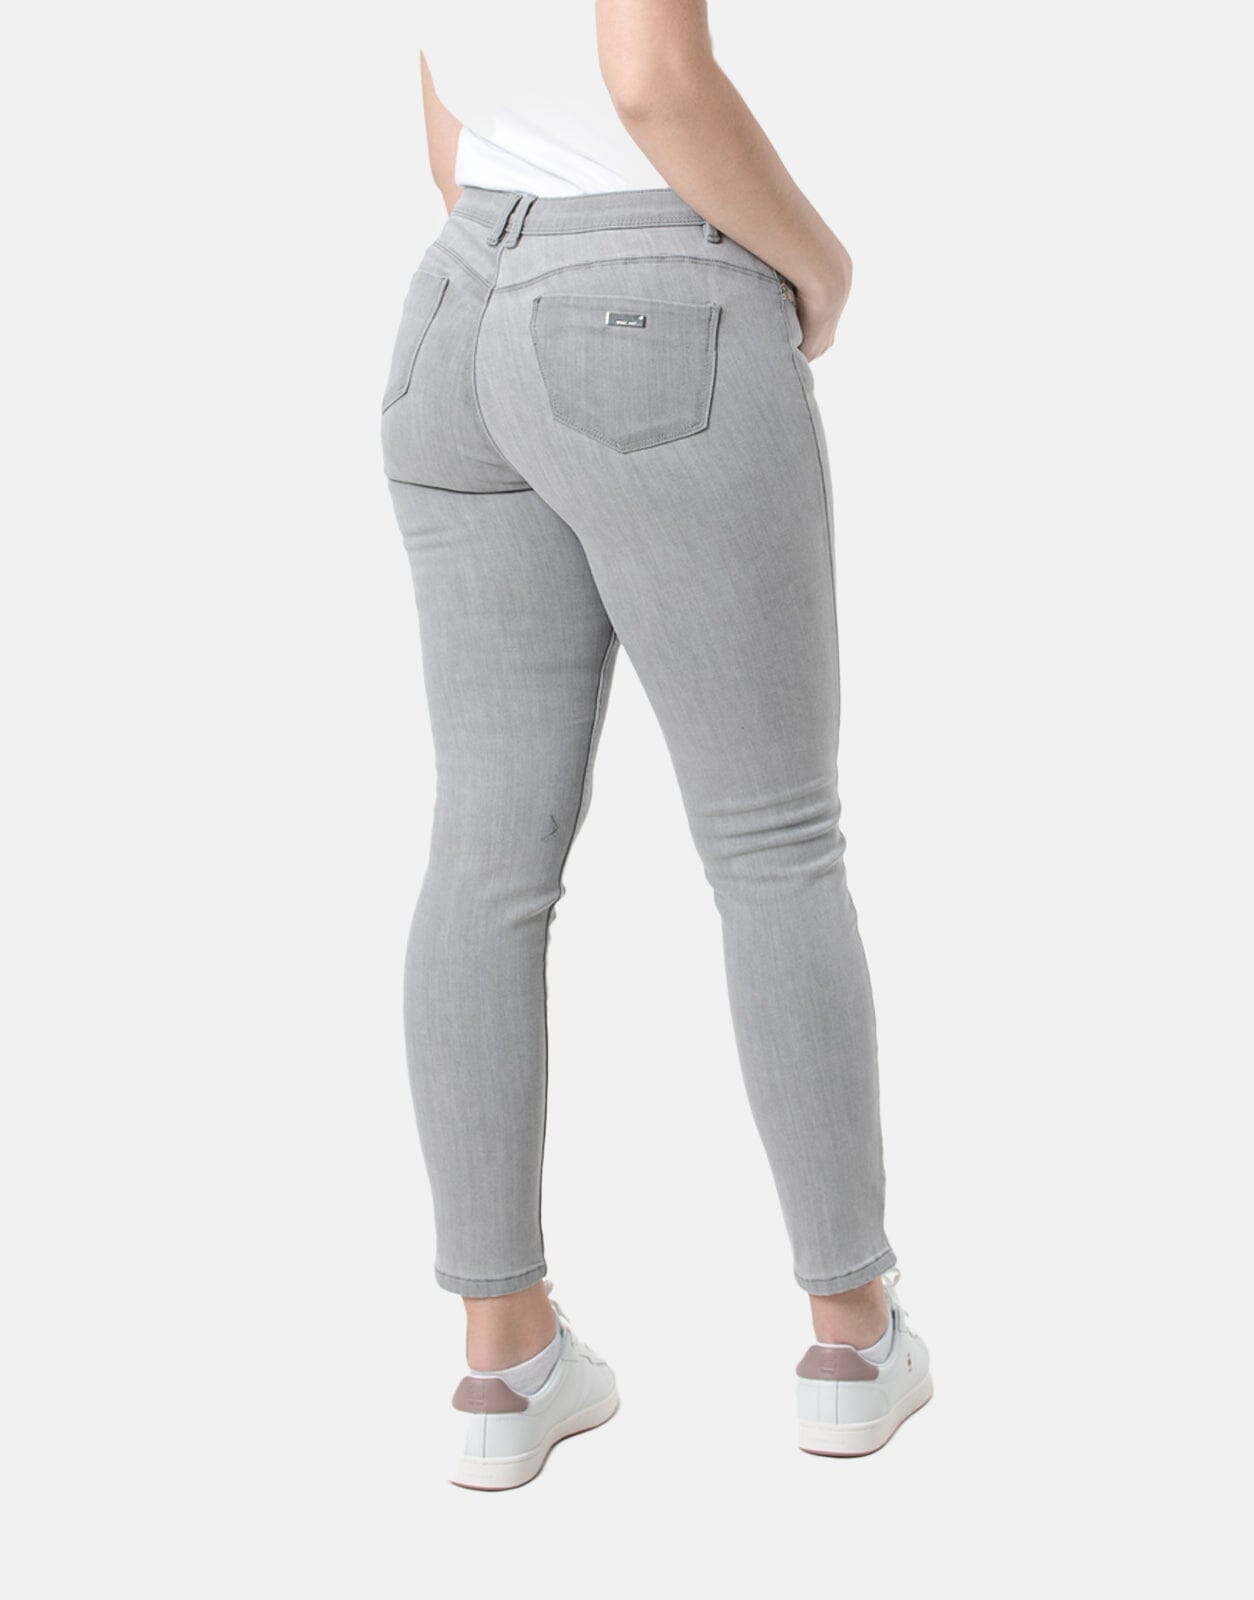 Sissy Boy Axel Mid Waist Pocket Bling Grey Jeans - Subwear